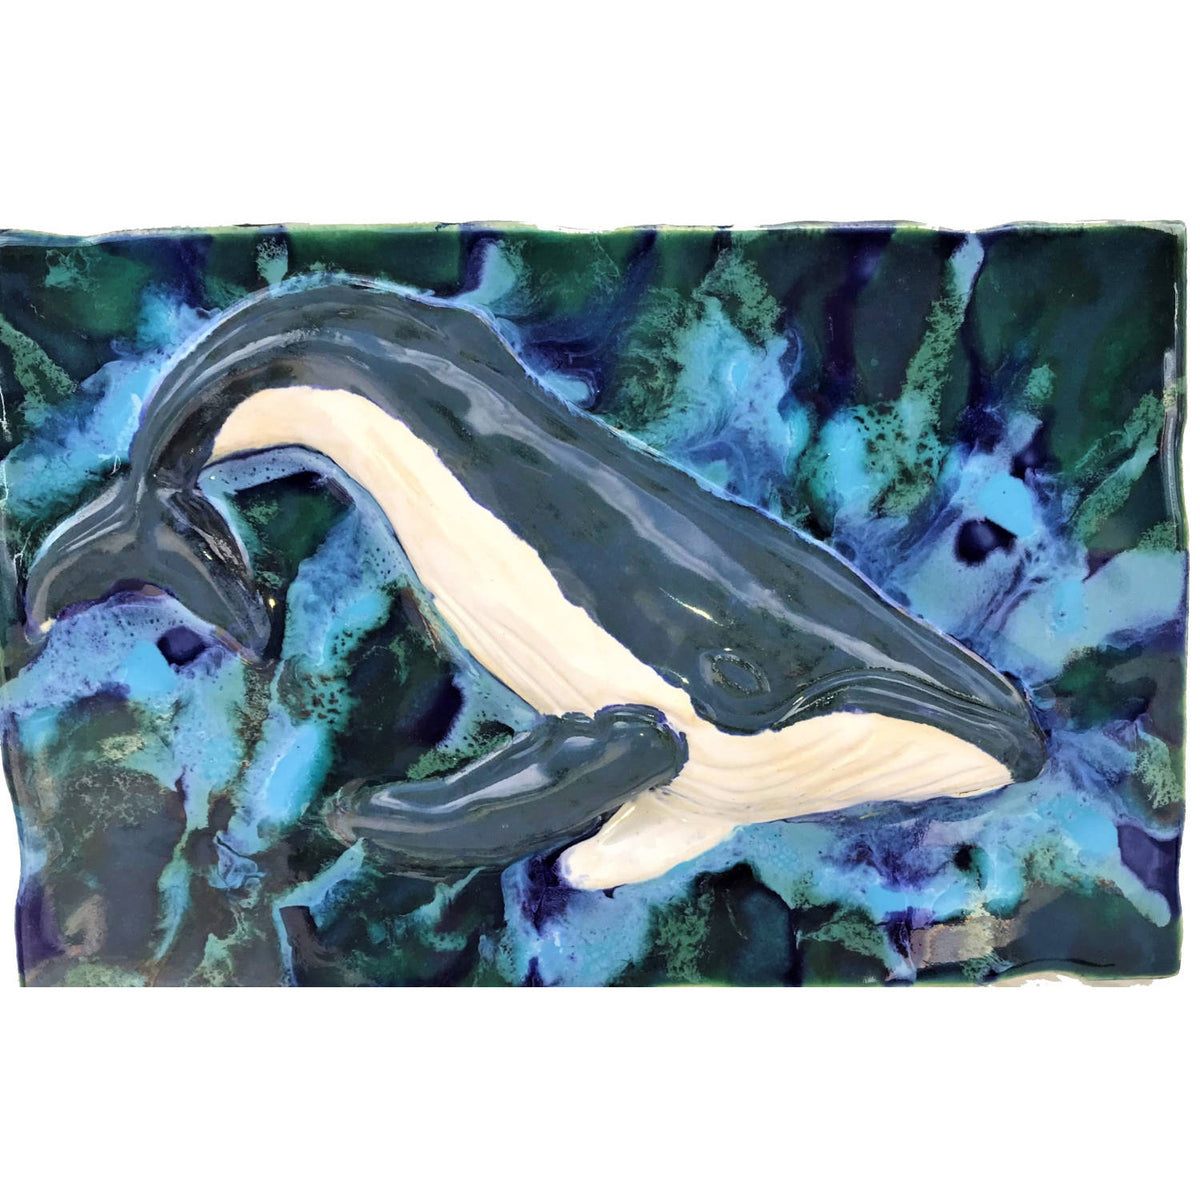 Ceramic Whale Kitchen Backsplash Tile Humpback Whale Design, maui humpback whale design, ceramic humpback whale artwork, beach house whale artwork